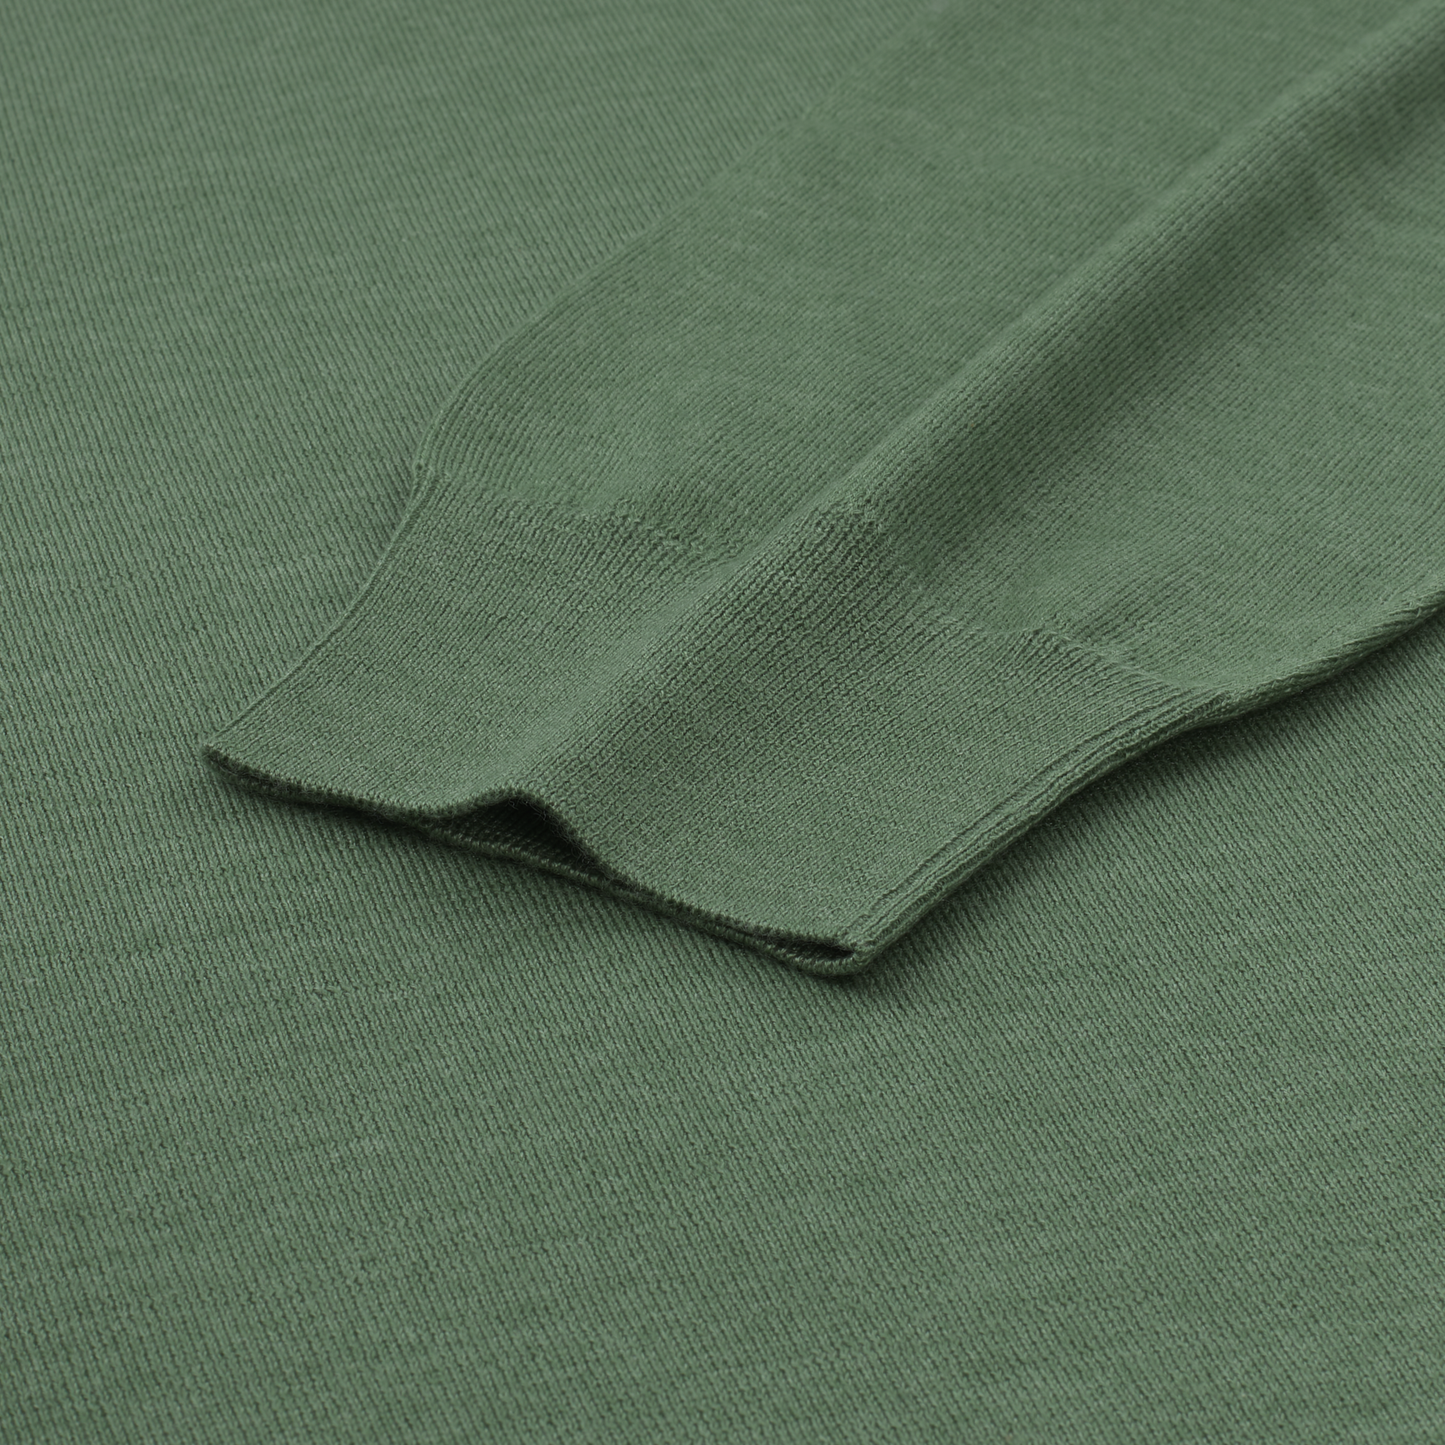 Cruciani Crew-Neck Cashmere and Silk-Blend Sweater in Olive Green - SARTALE